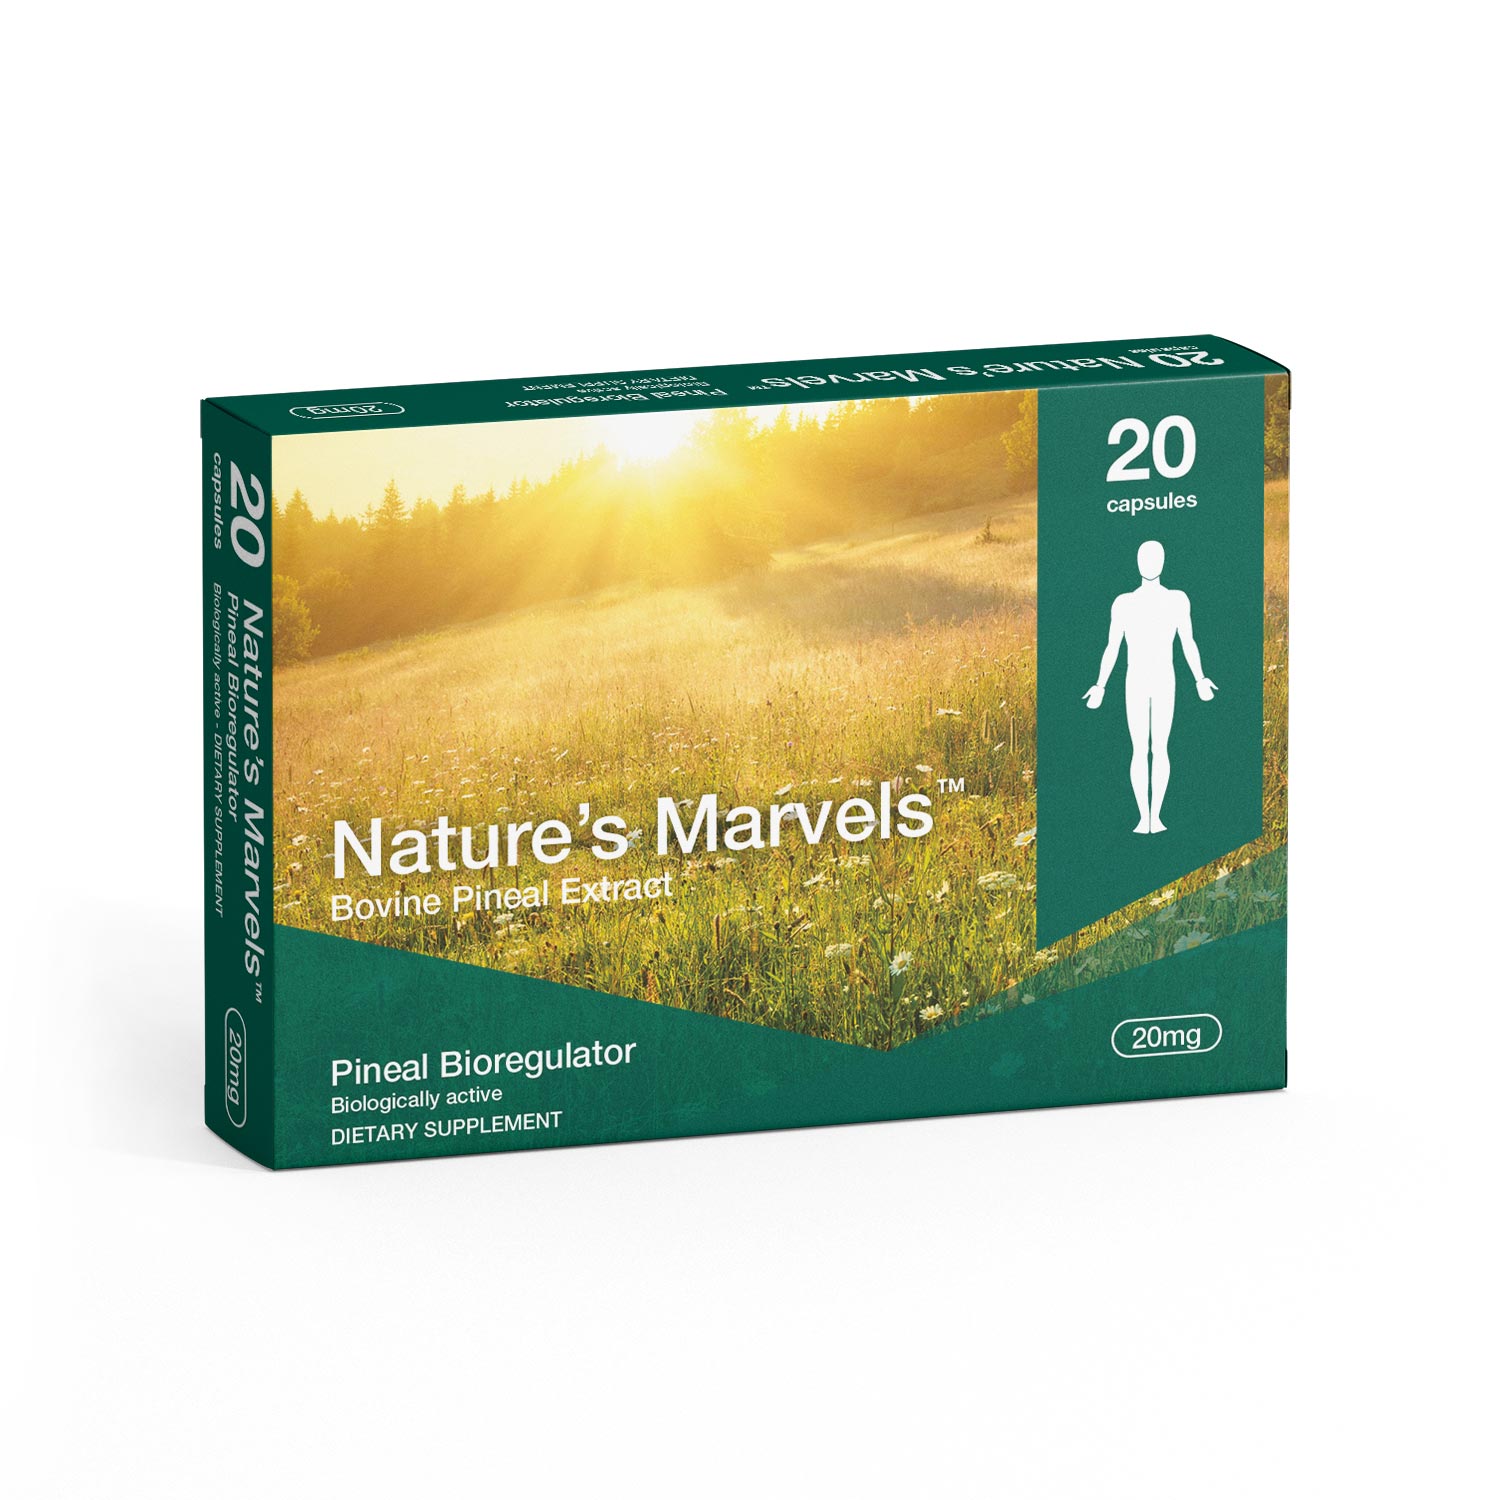 Pineal Bioregulator dietary supplement packaging front